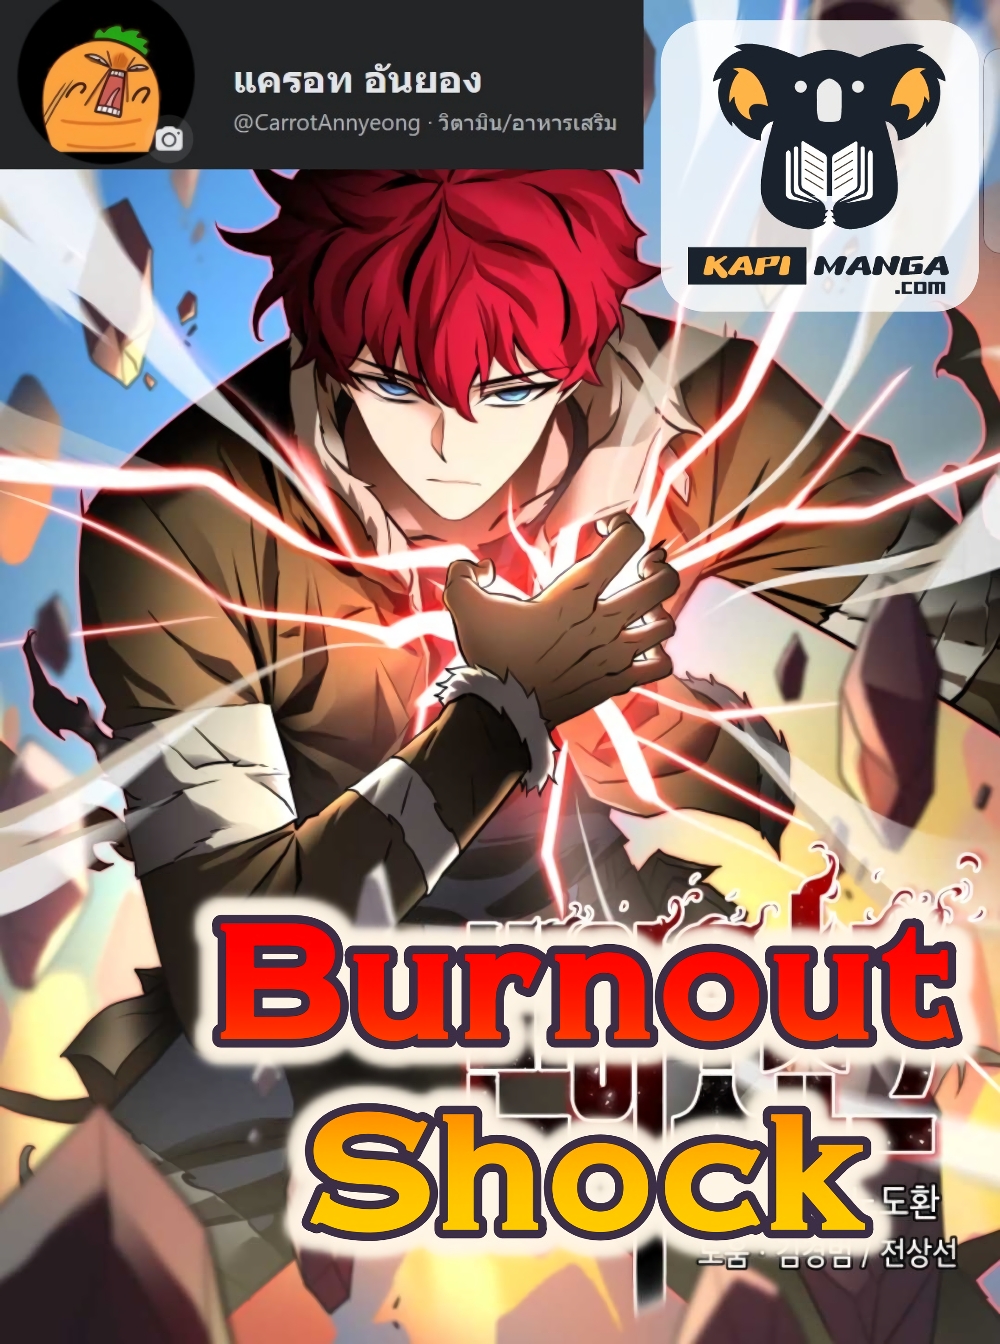 Burnout Shock14 (1)